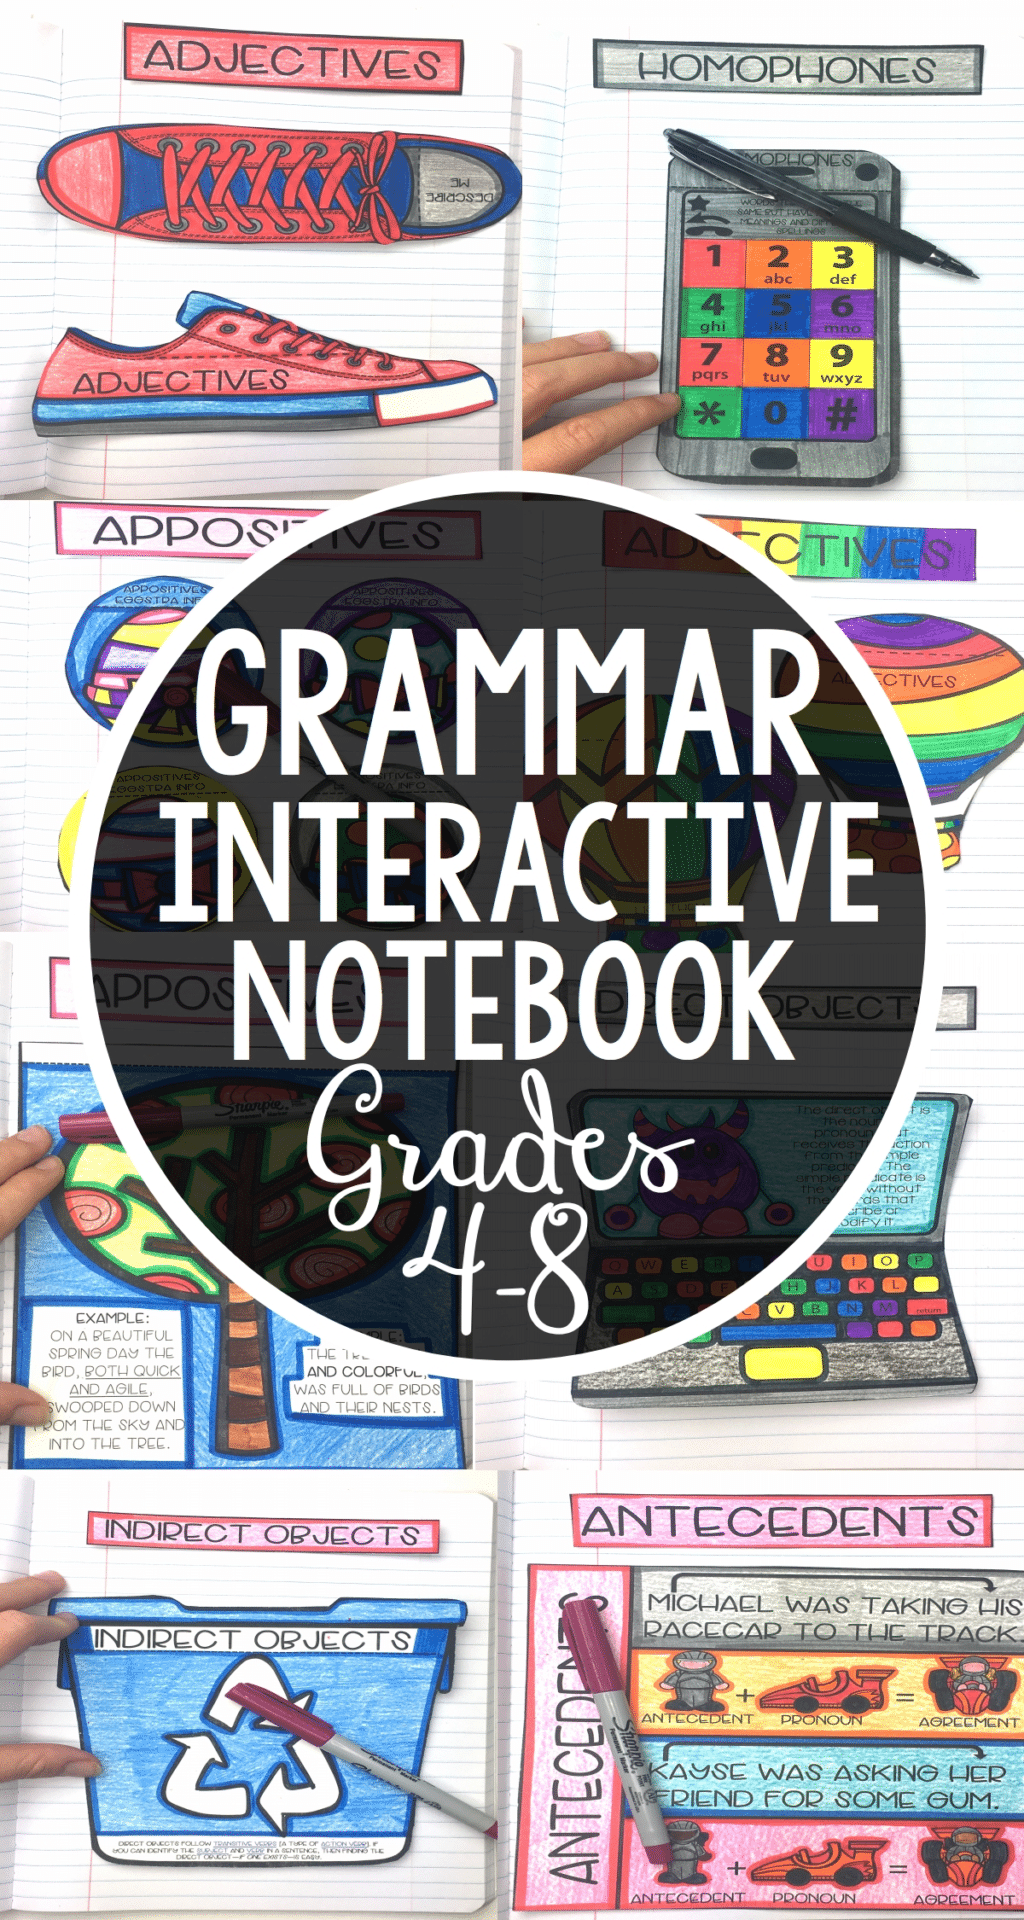 Grammar Interactive Notebook Grades 4-8